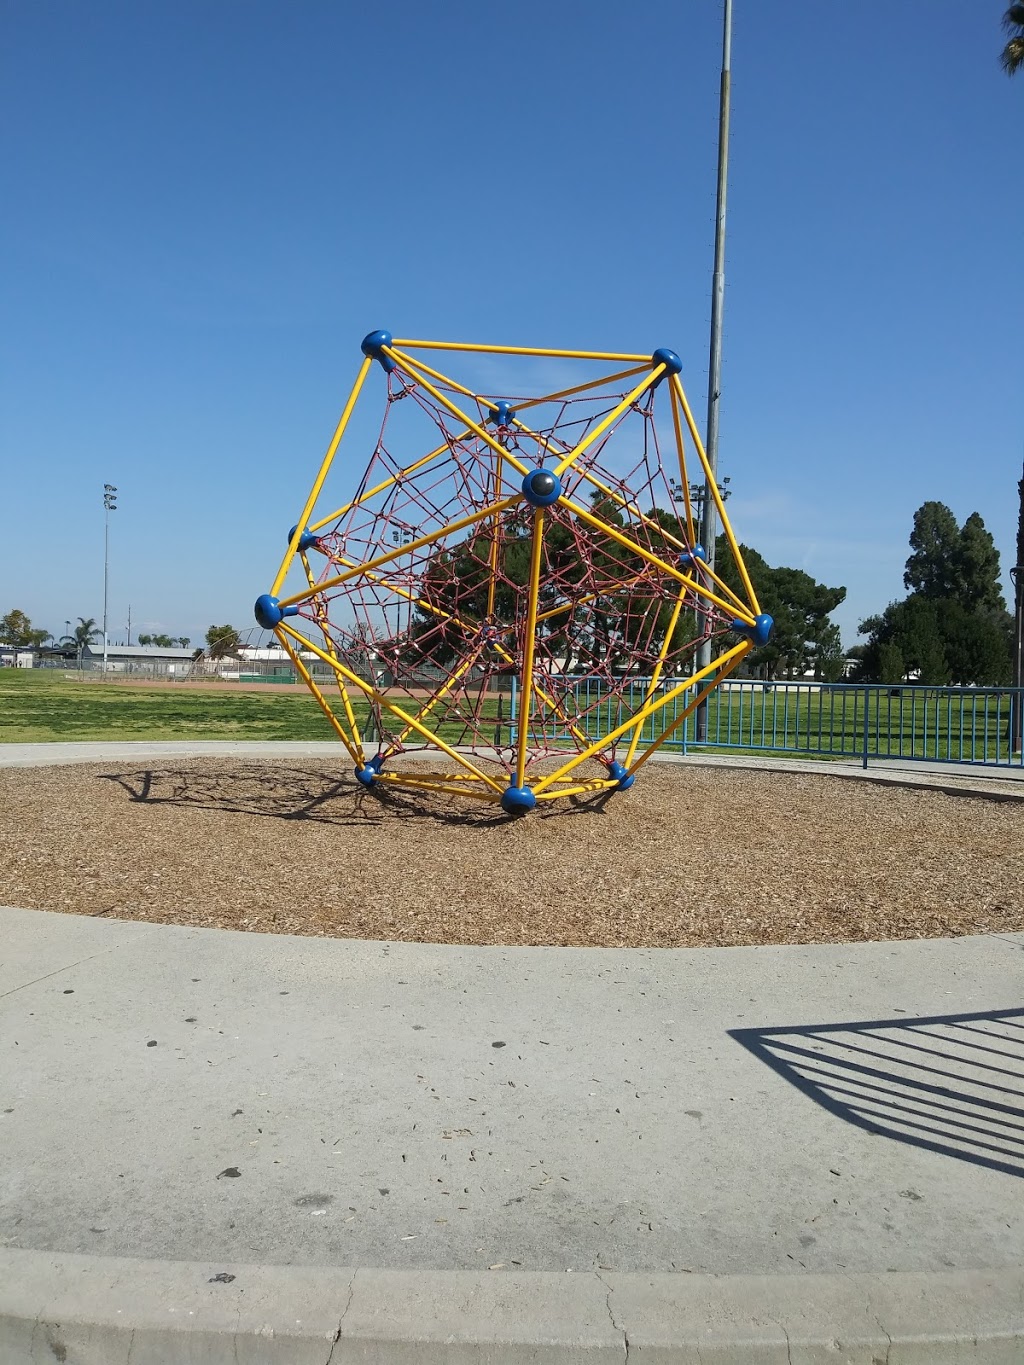 Playground at Mountain Gate Park | 3100 S Main St, Corona, CA 92882, USA | Phone: (951) 736-2400